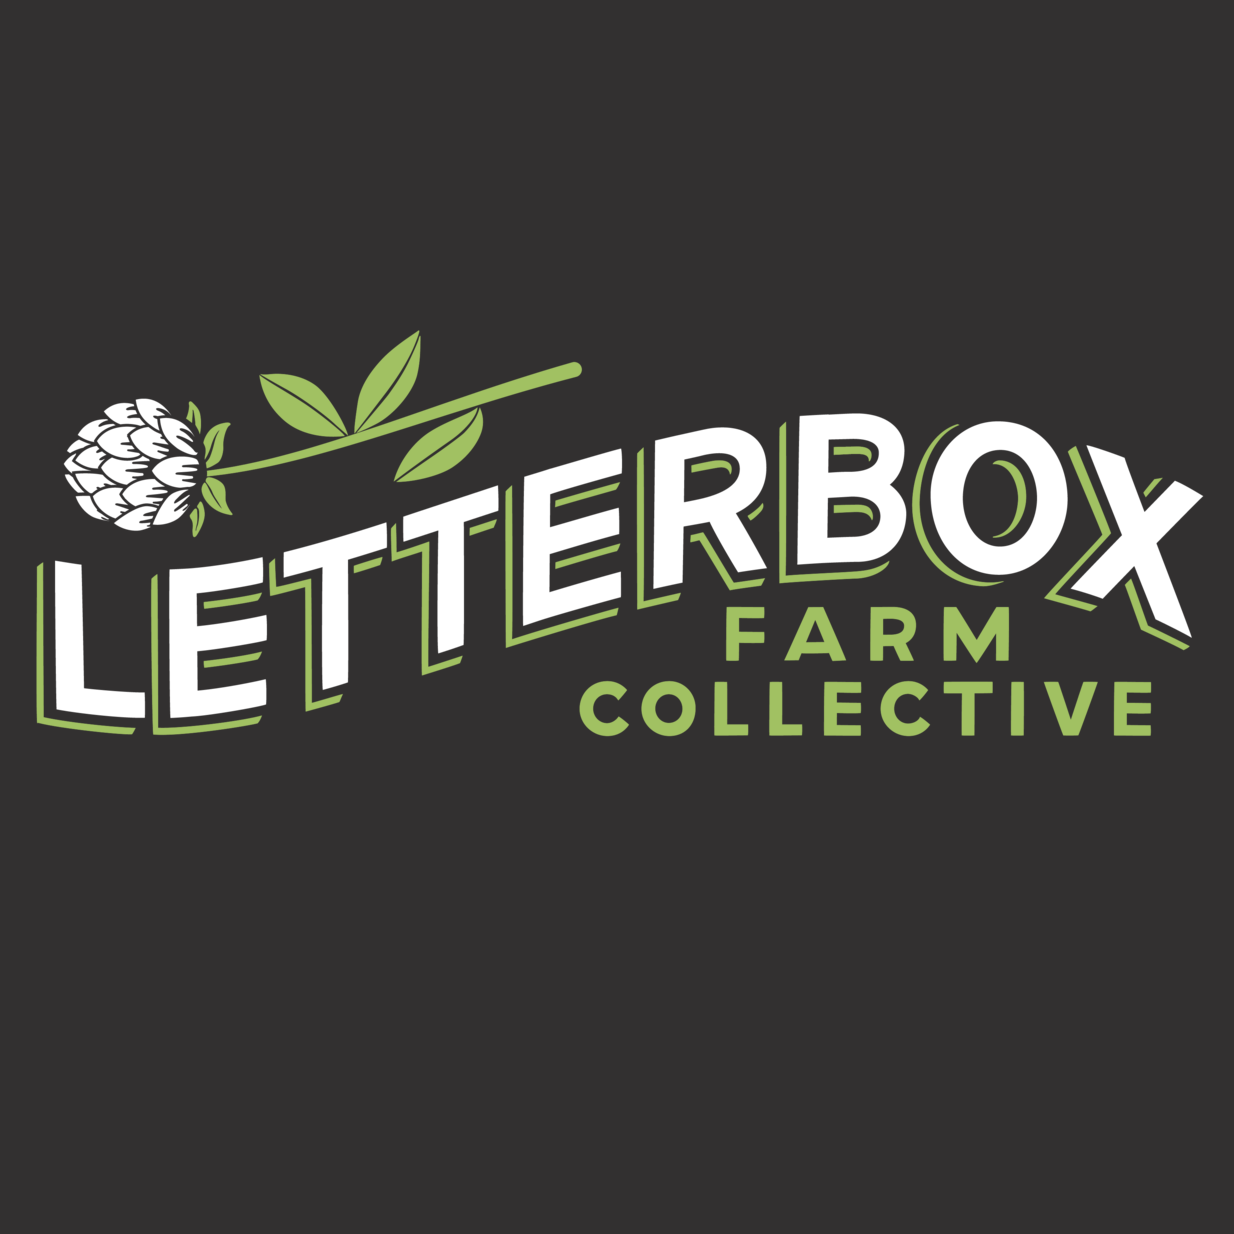 Letterbox Farm